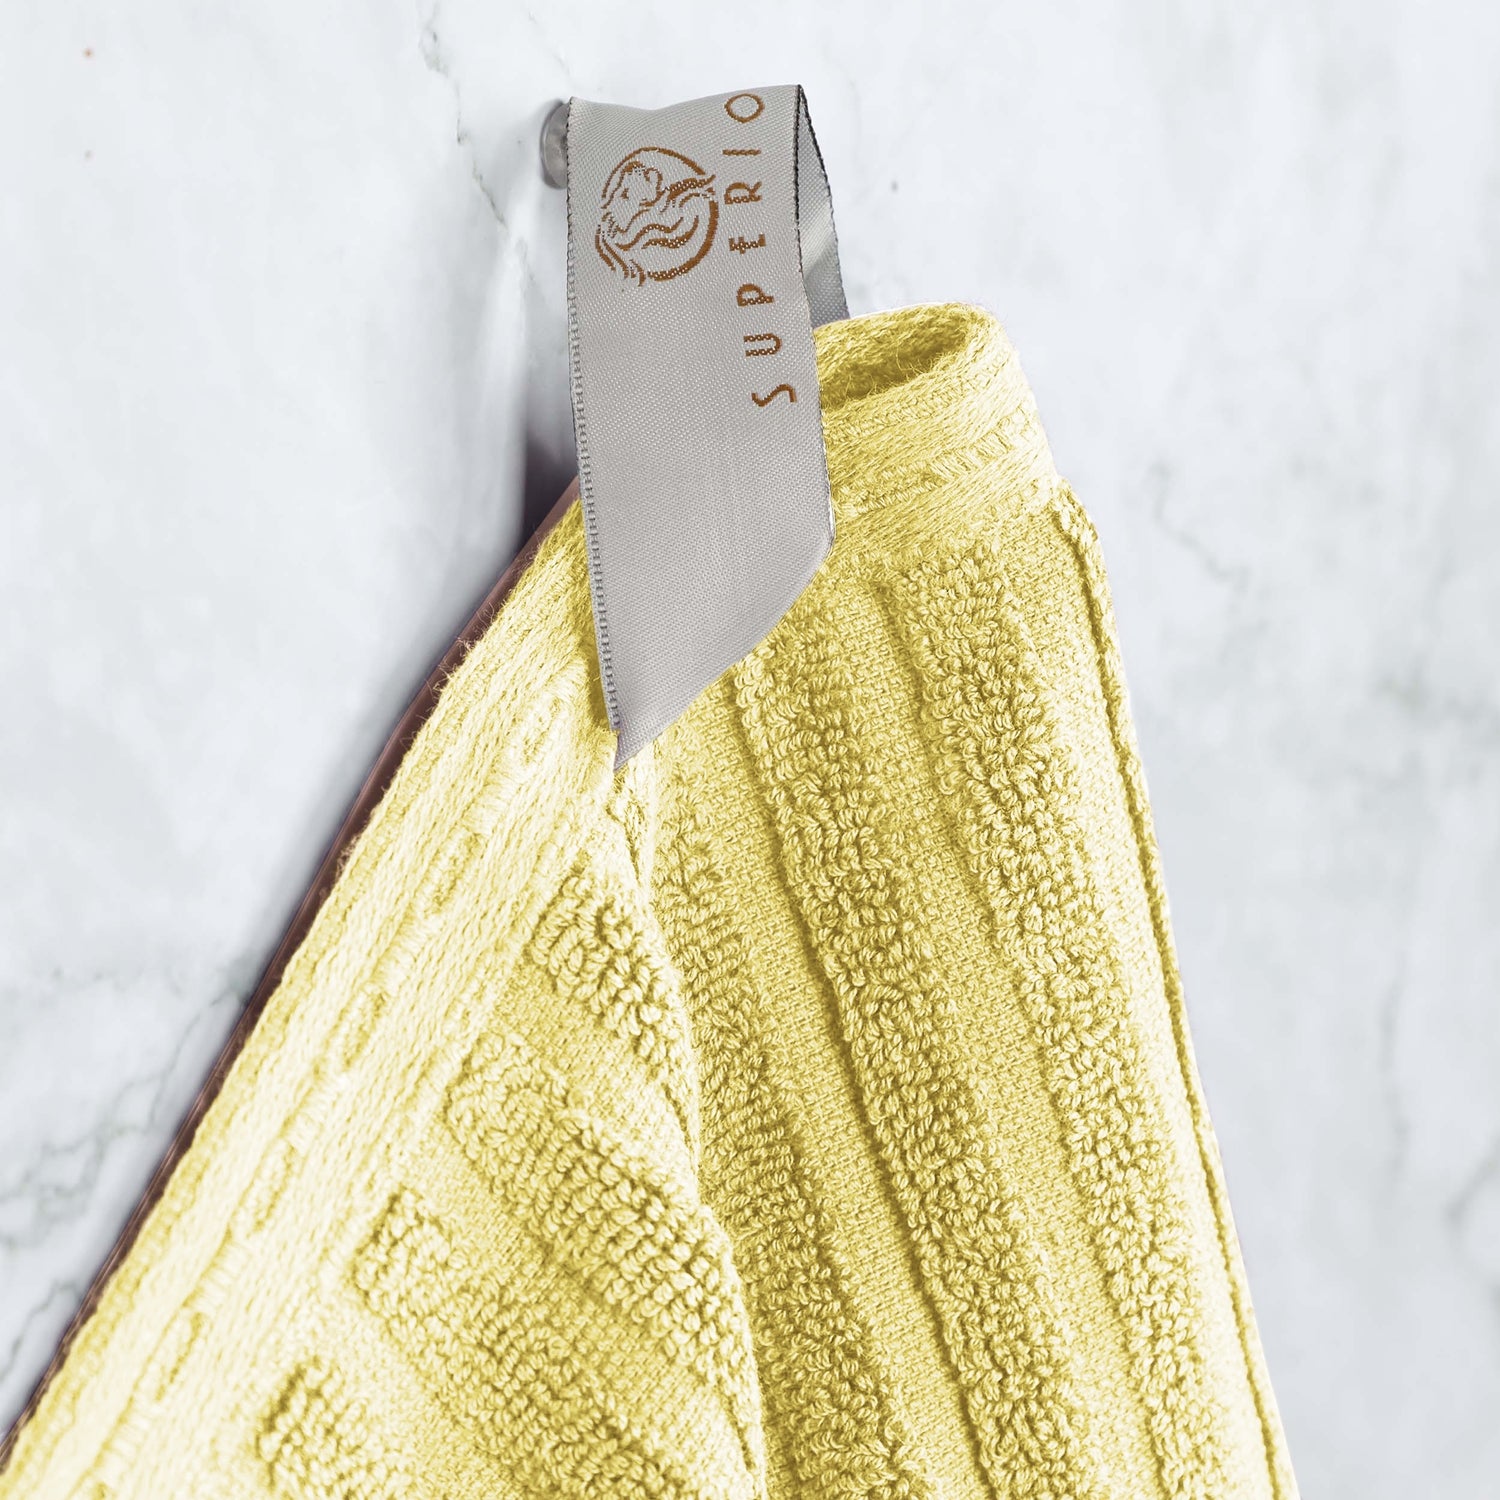 Ribbed Textured Cotton Medium Weight 8 Piece Towel Set - Golden Mist